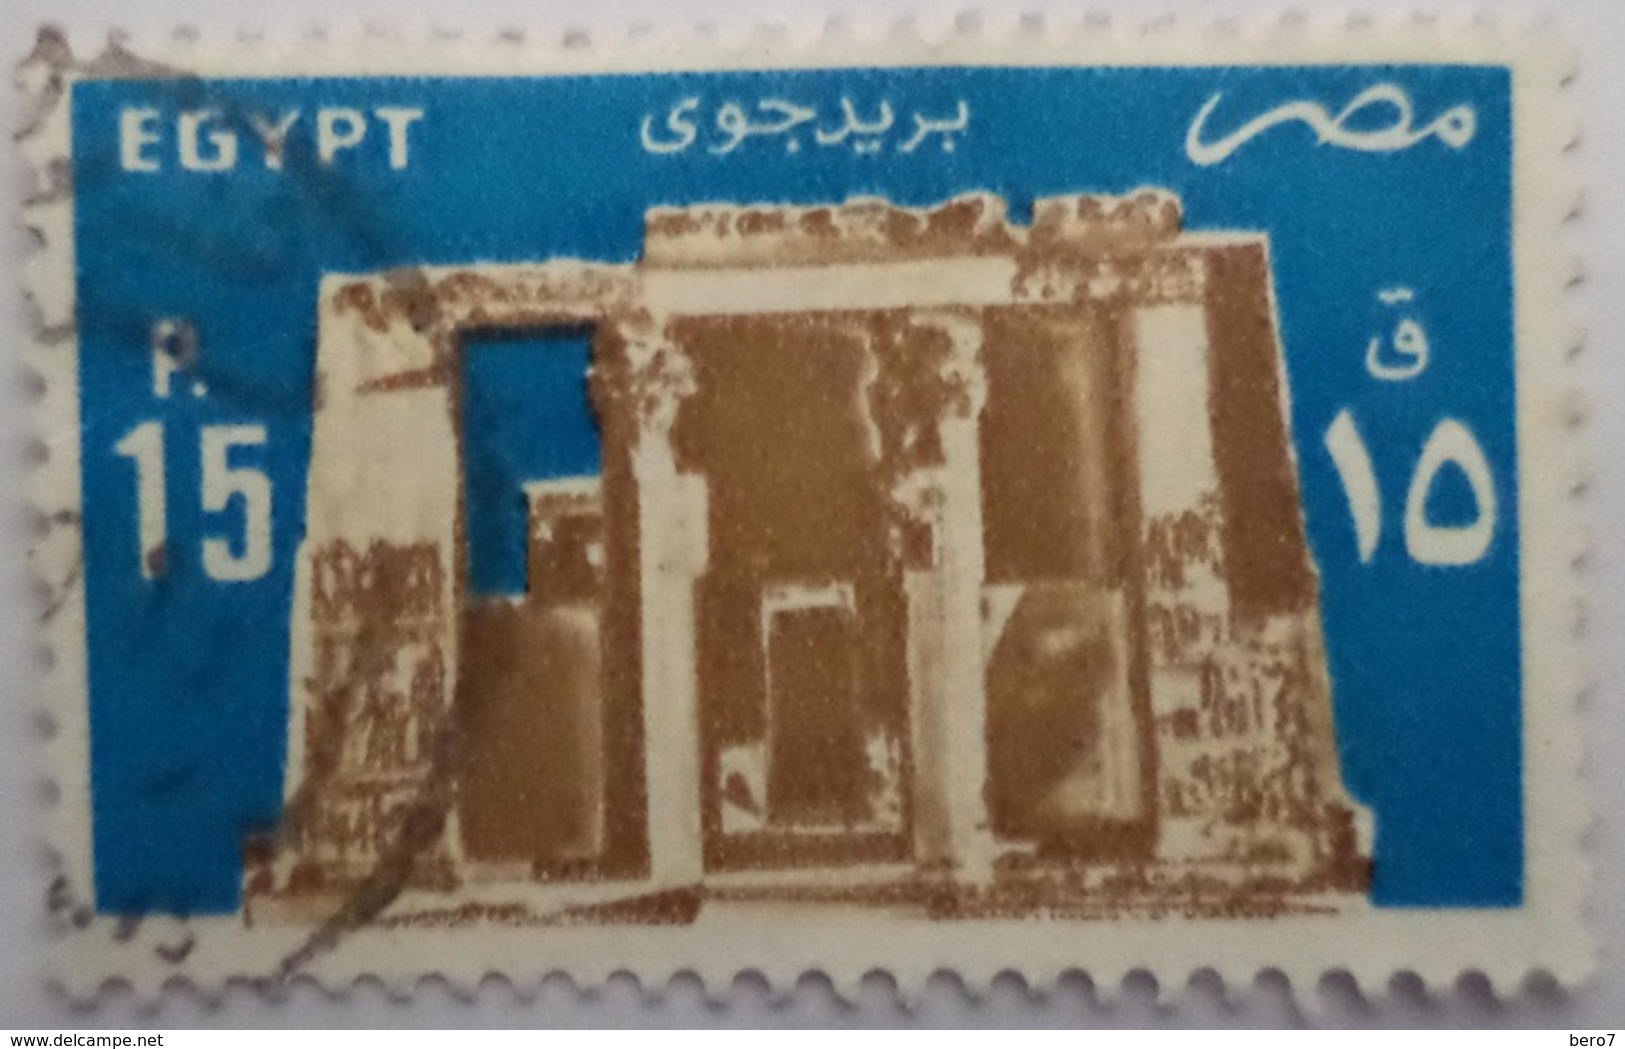 EGYPT - 1985- Temple Of Horus, Edfu - Air Mail -  (Egypte) (Egitto) (Ägypten) (Egipto) (Egypten) - Gebraucht